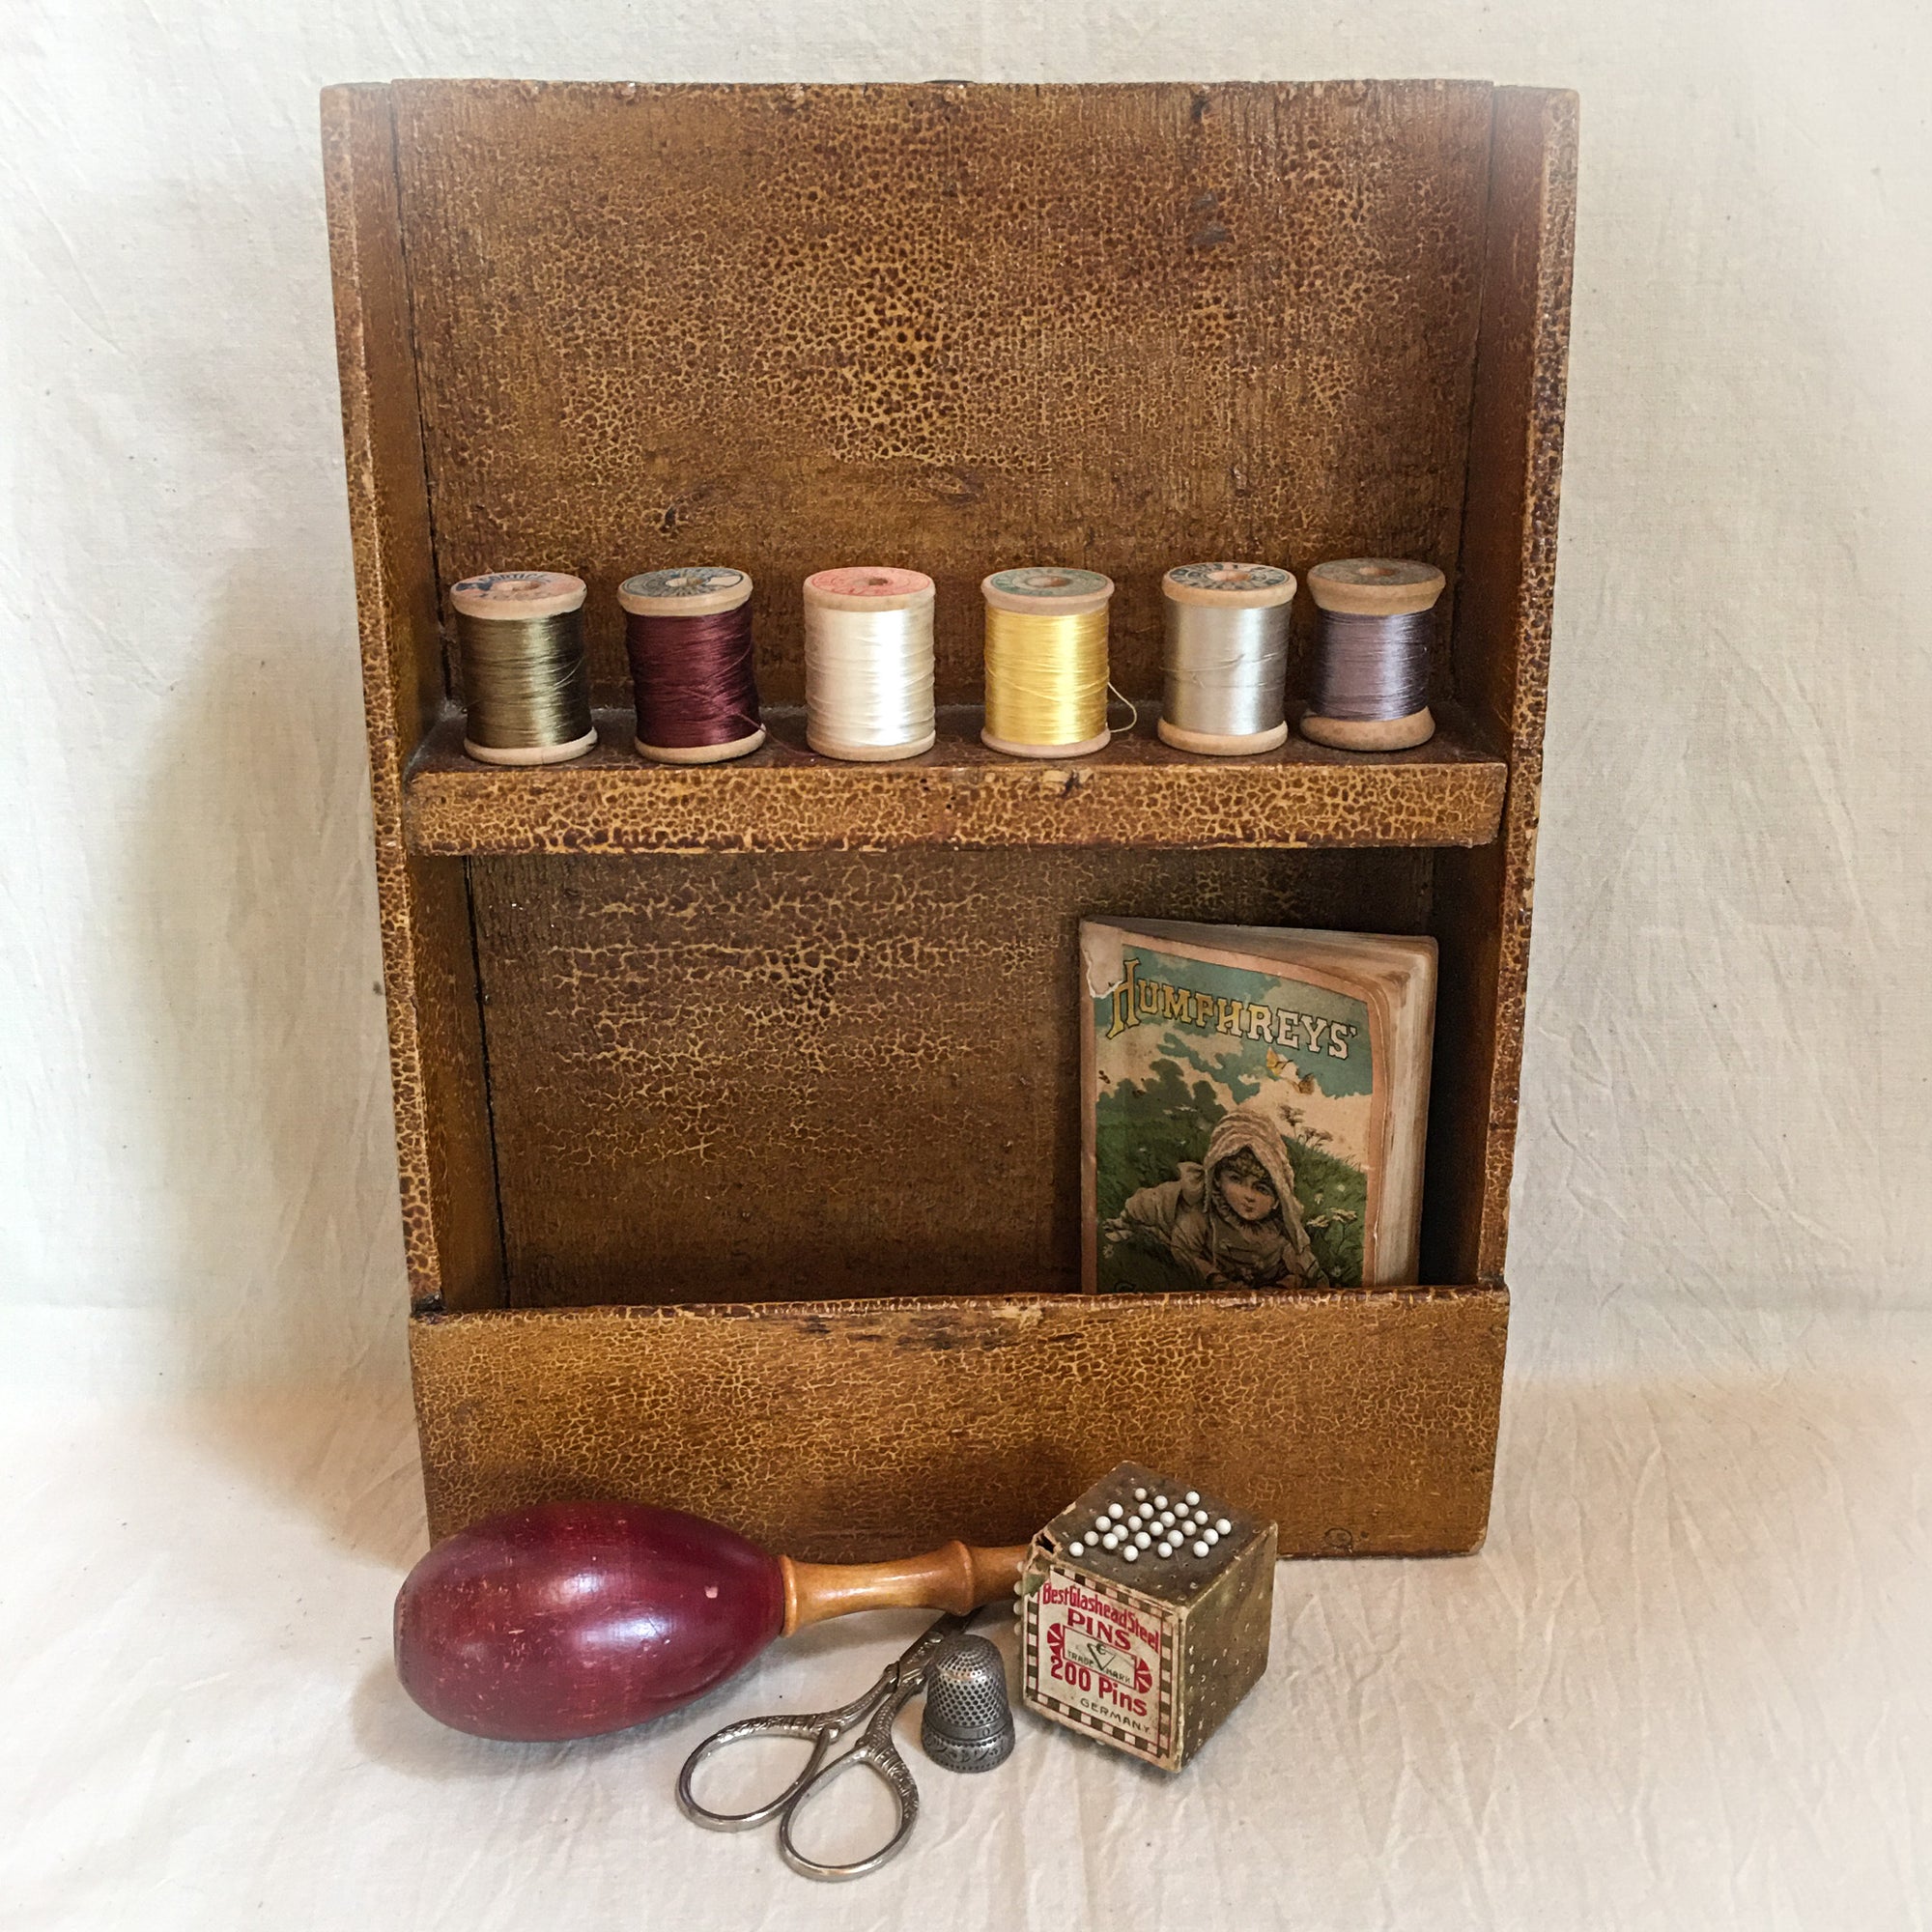 Antique Wall Shelf, Spool Holder with 6 Spools of Silk Thread